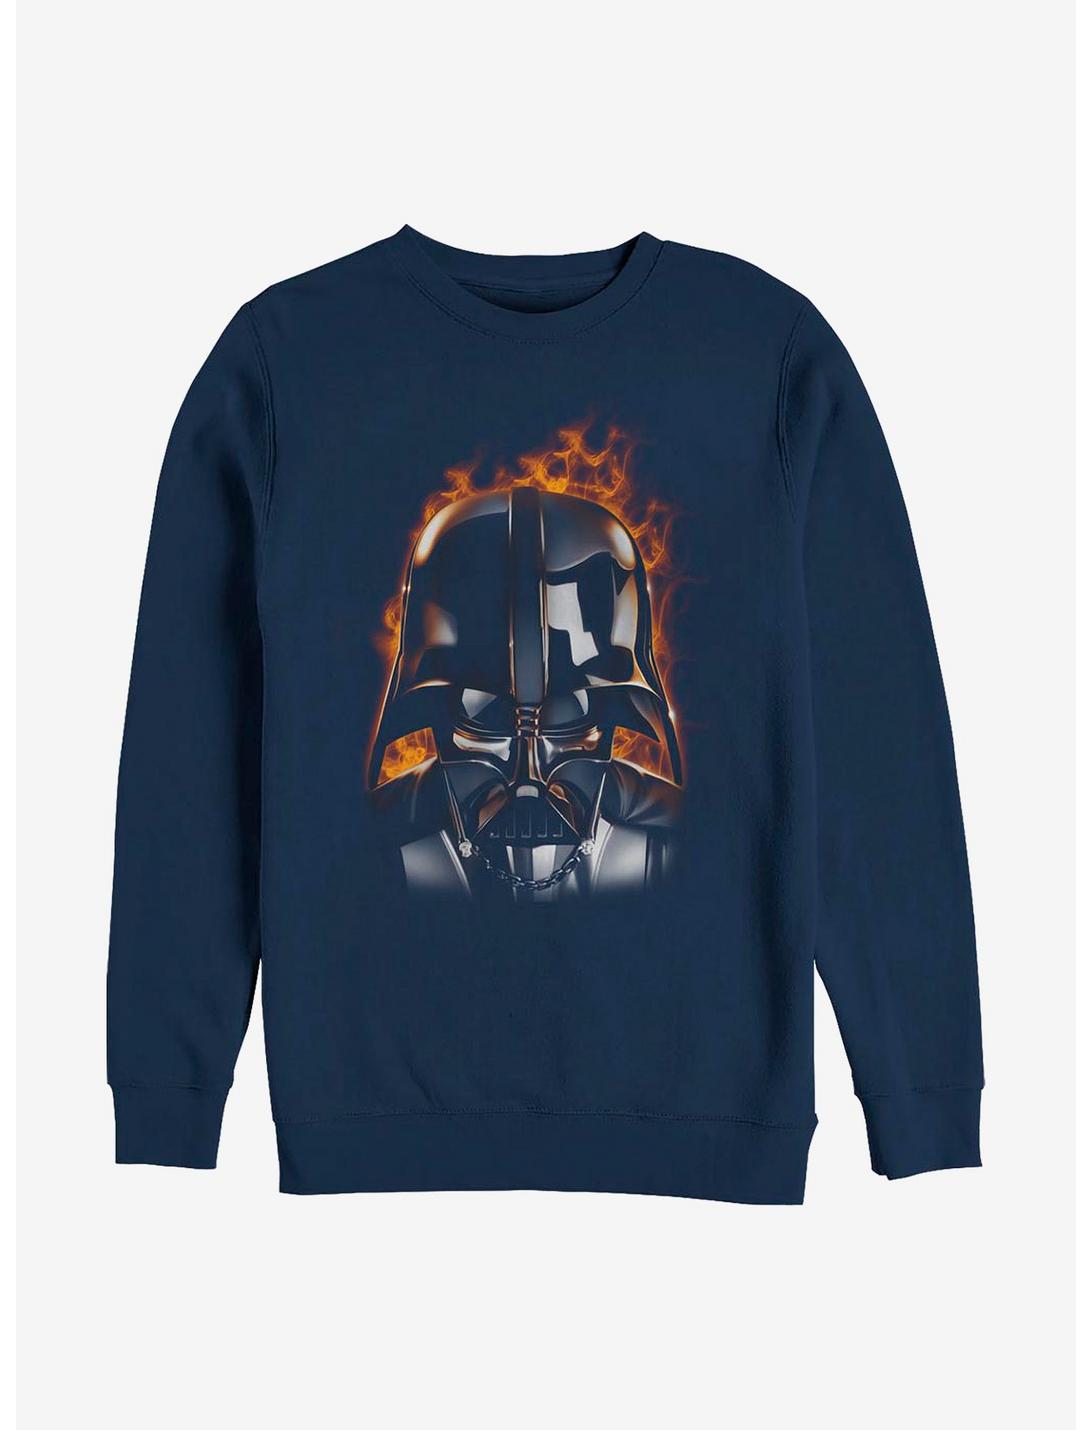 Star Wars Darth Vader With Flames Crew Sweatshirt, NAVY, hi-res